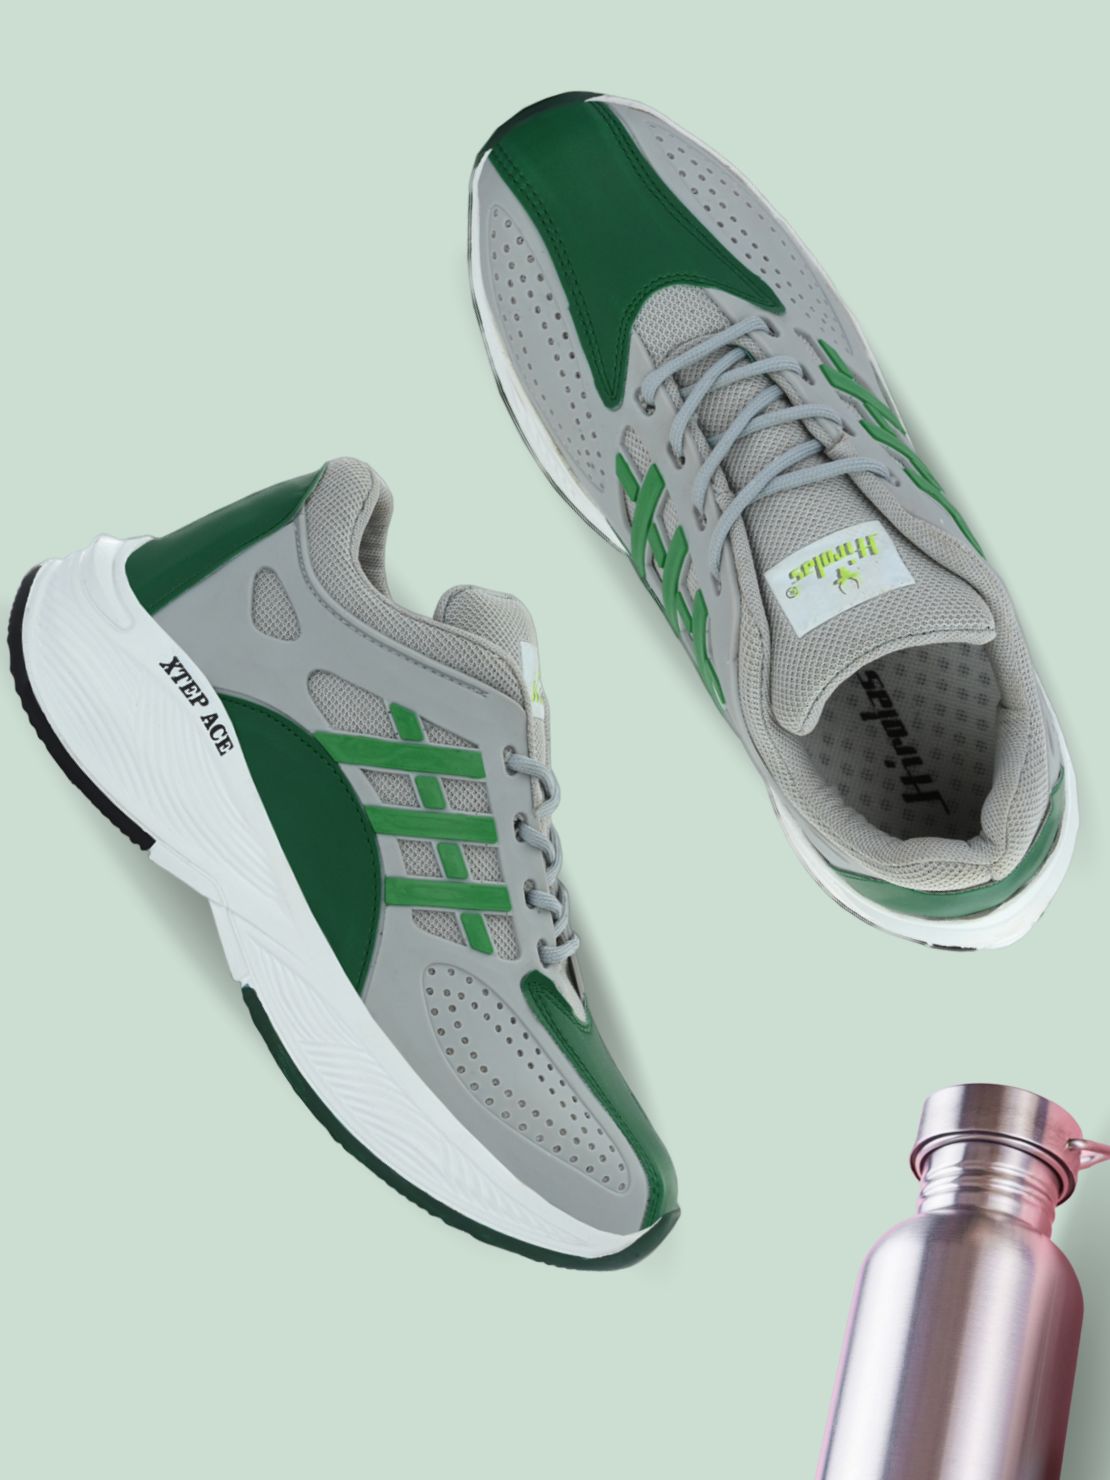 Hirolas® Men's Grey/Green Velocity Max Running Lace Up Sneaker Sport Shoes (HRL2078GRG)